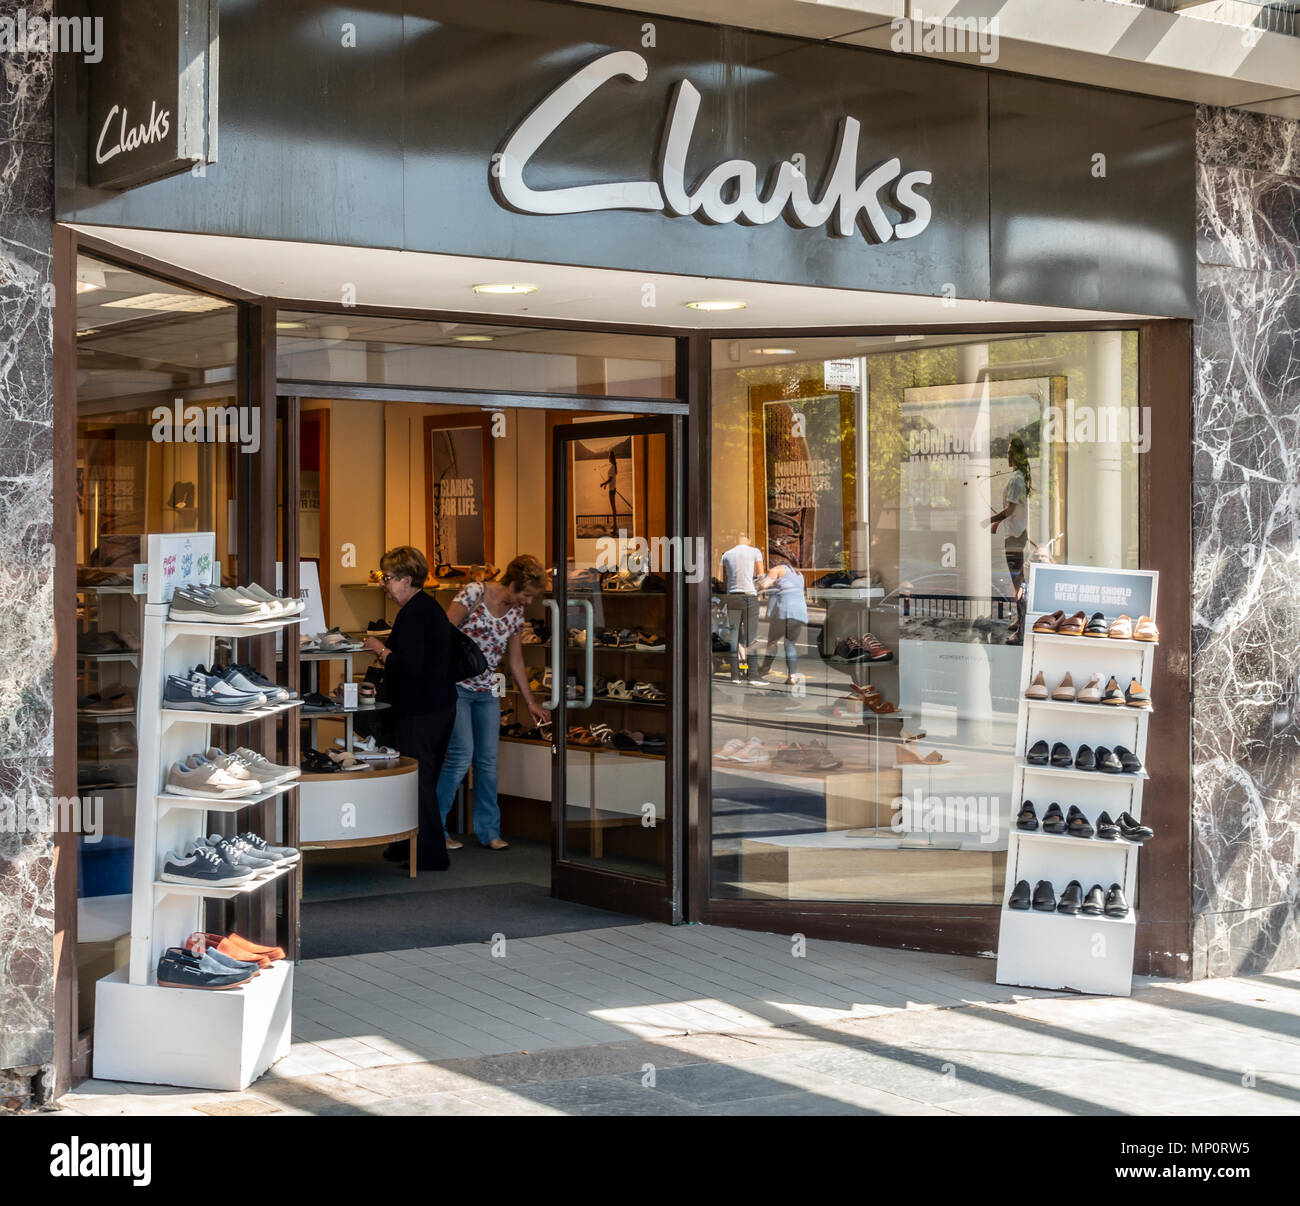 clarks shoe shop edinburgh